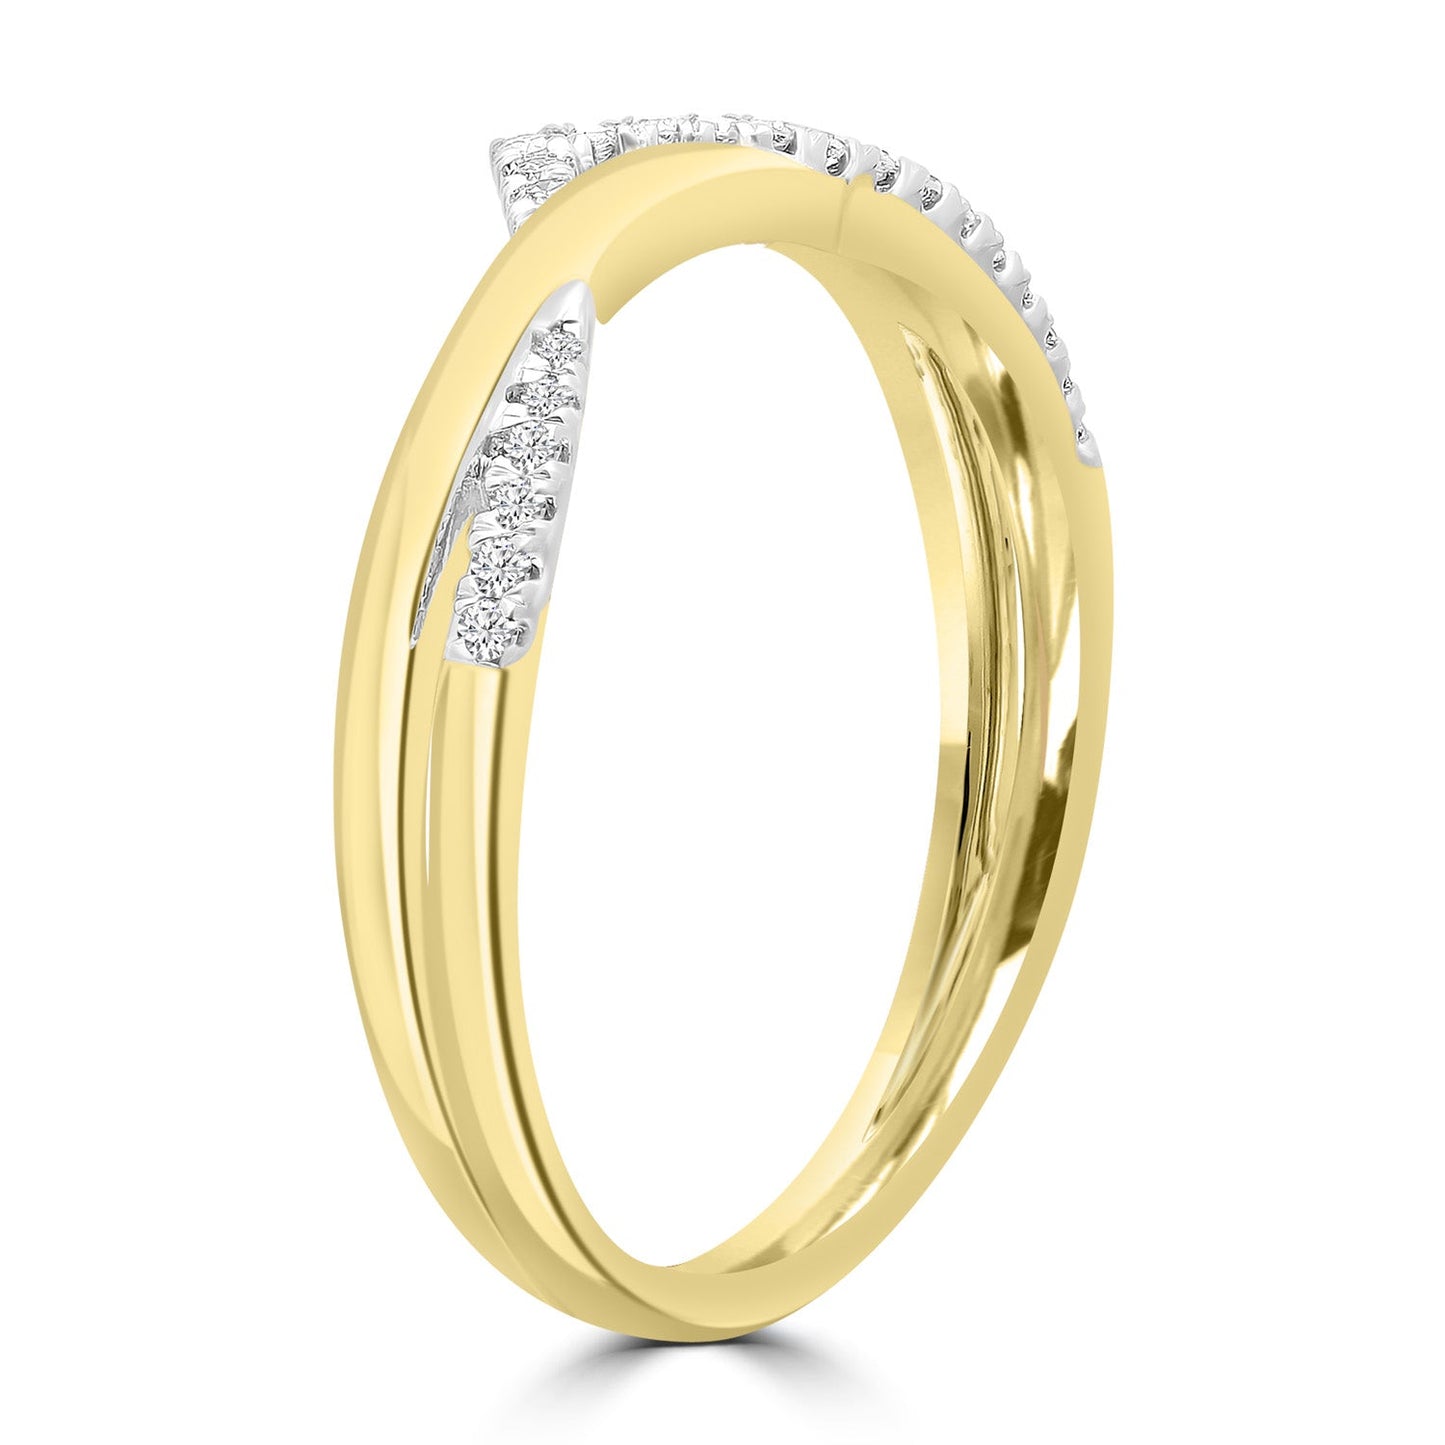 0.09ct HI I1 Diamond Ring in 9K Yellow Gold